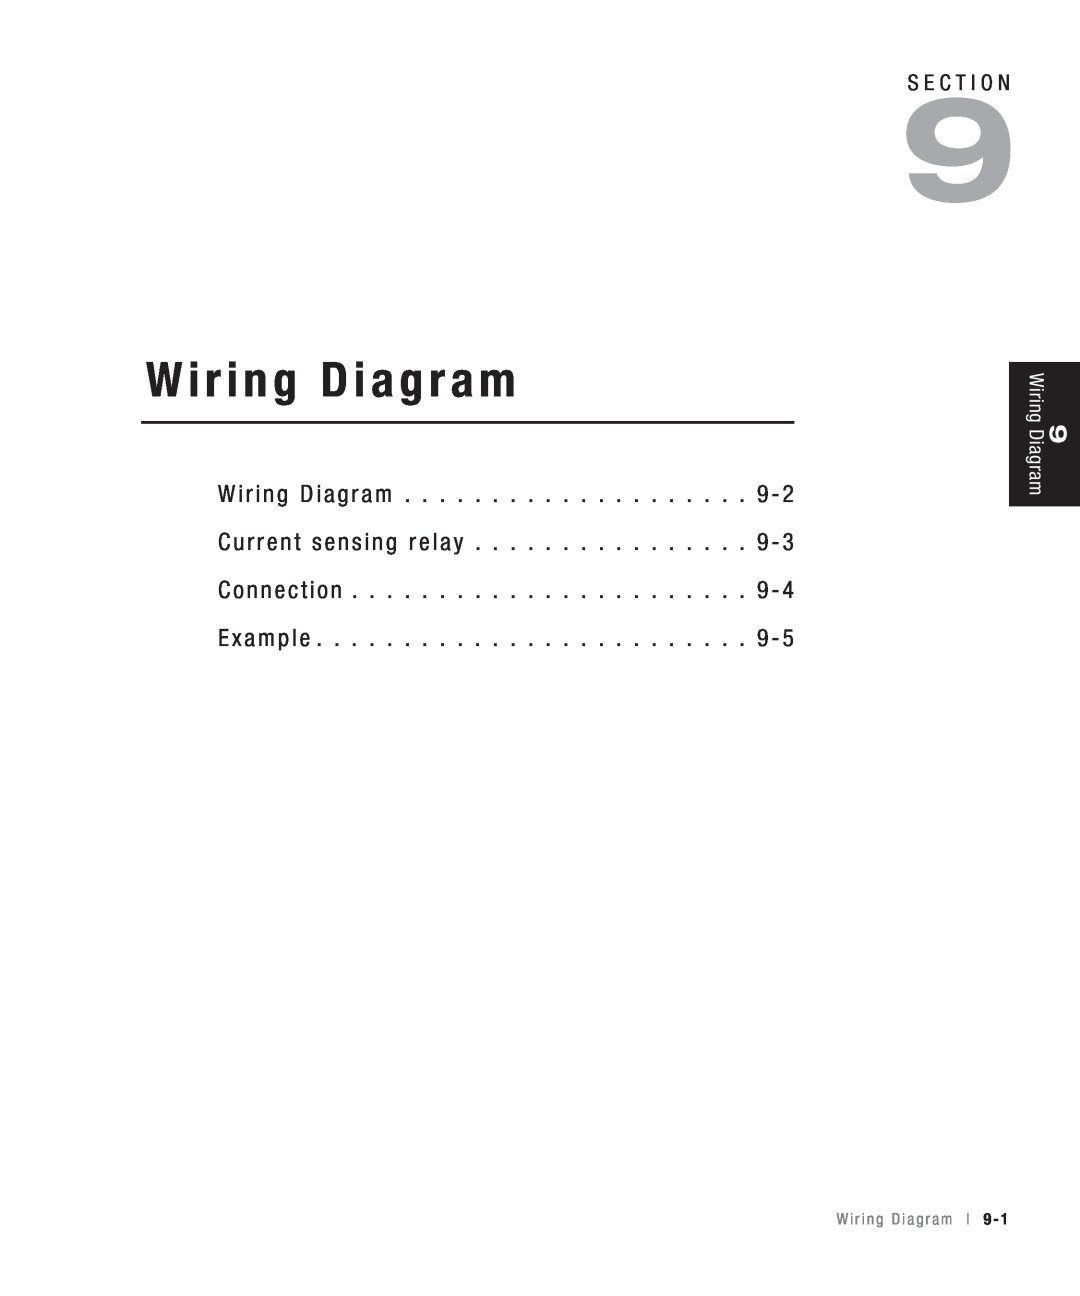 Conair CHS-810 manual Wiring Diagram, W i r i n g D i a g r a m l 9 